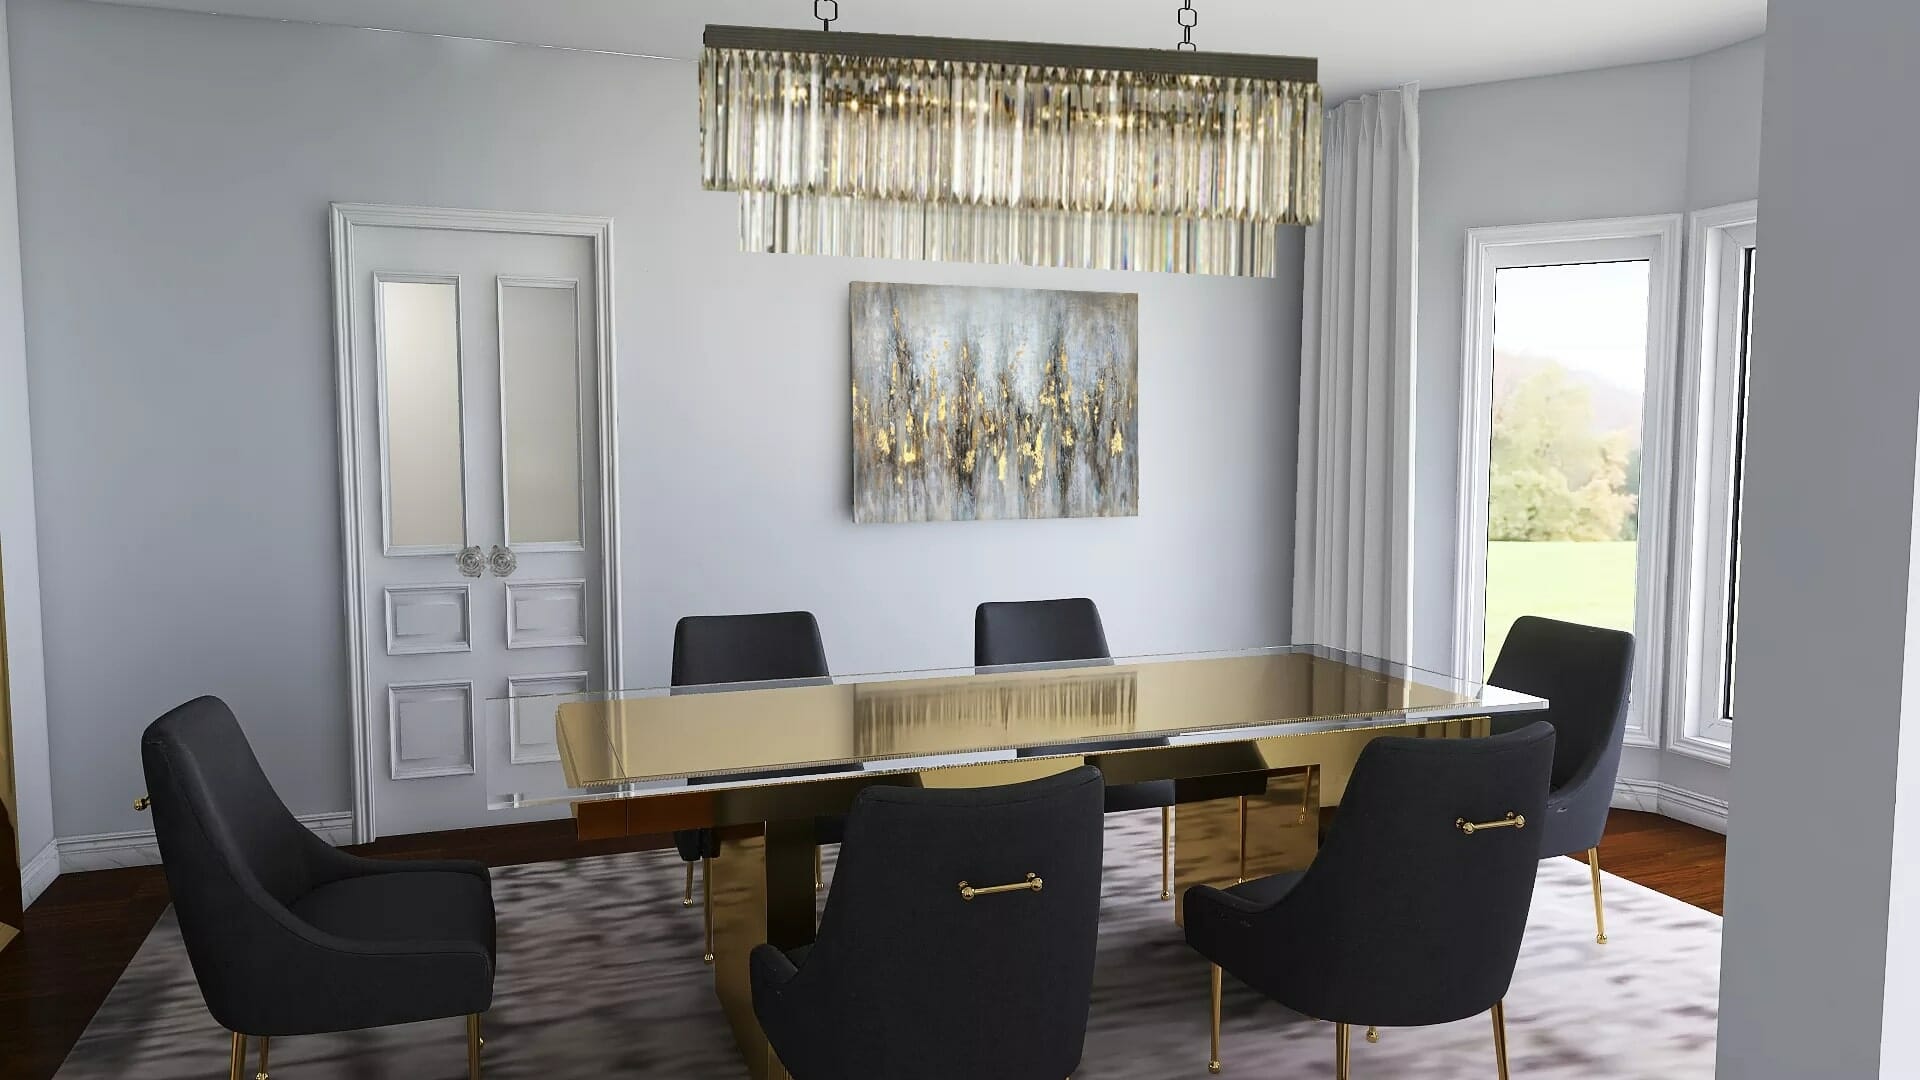 Glamorous dining room by top houzz interior designer memphis tn